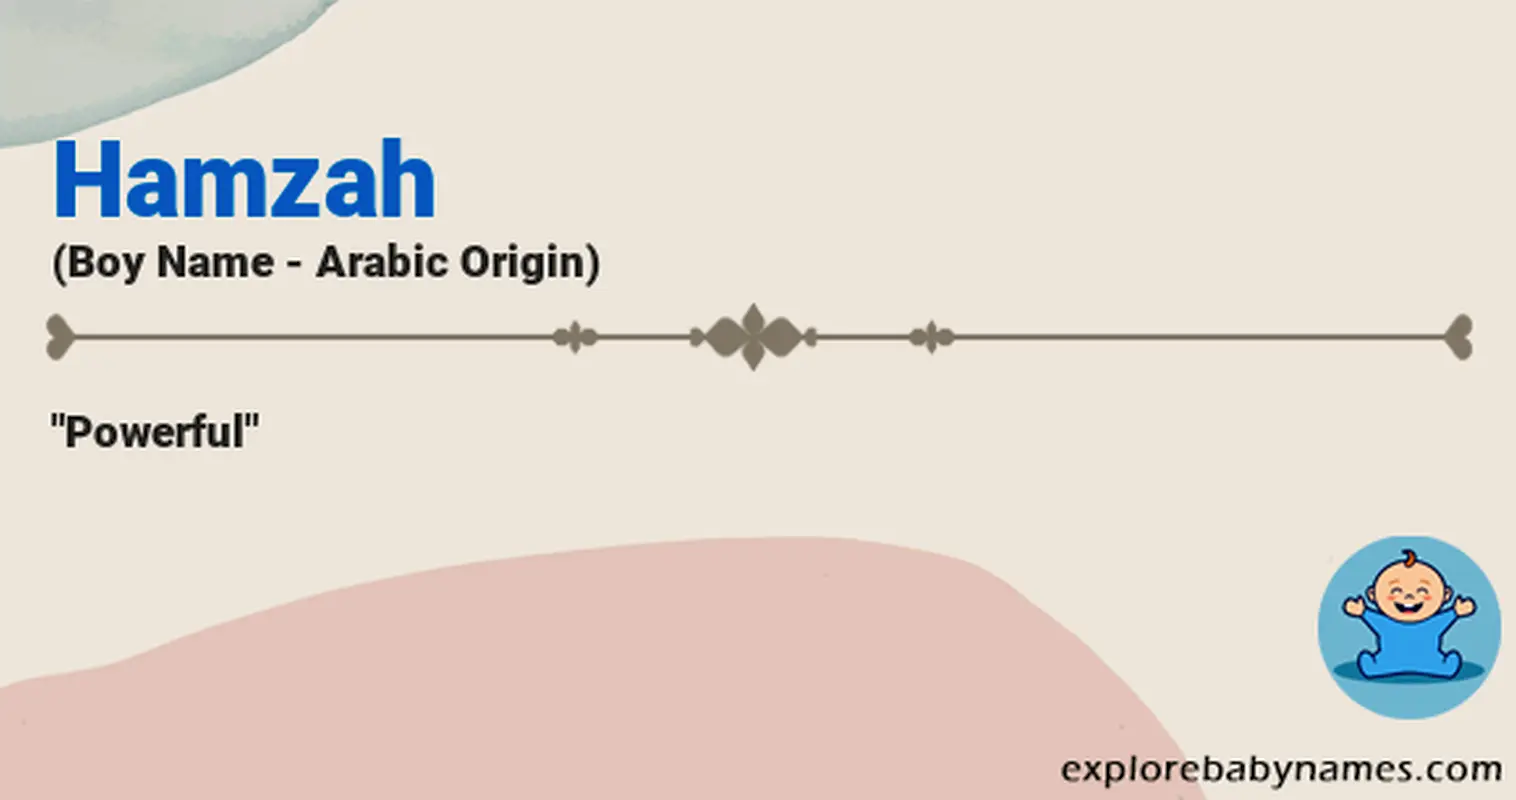 Meaning of Hamzah